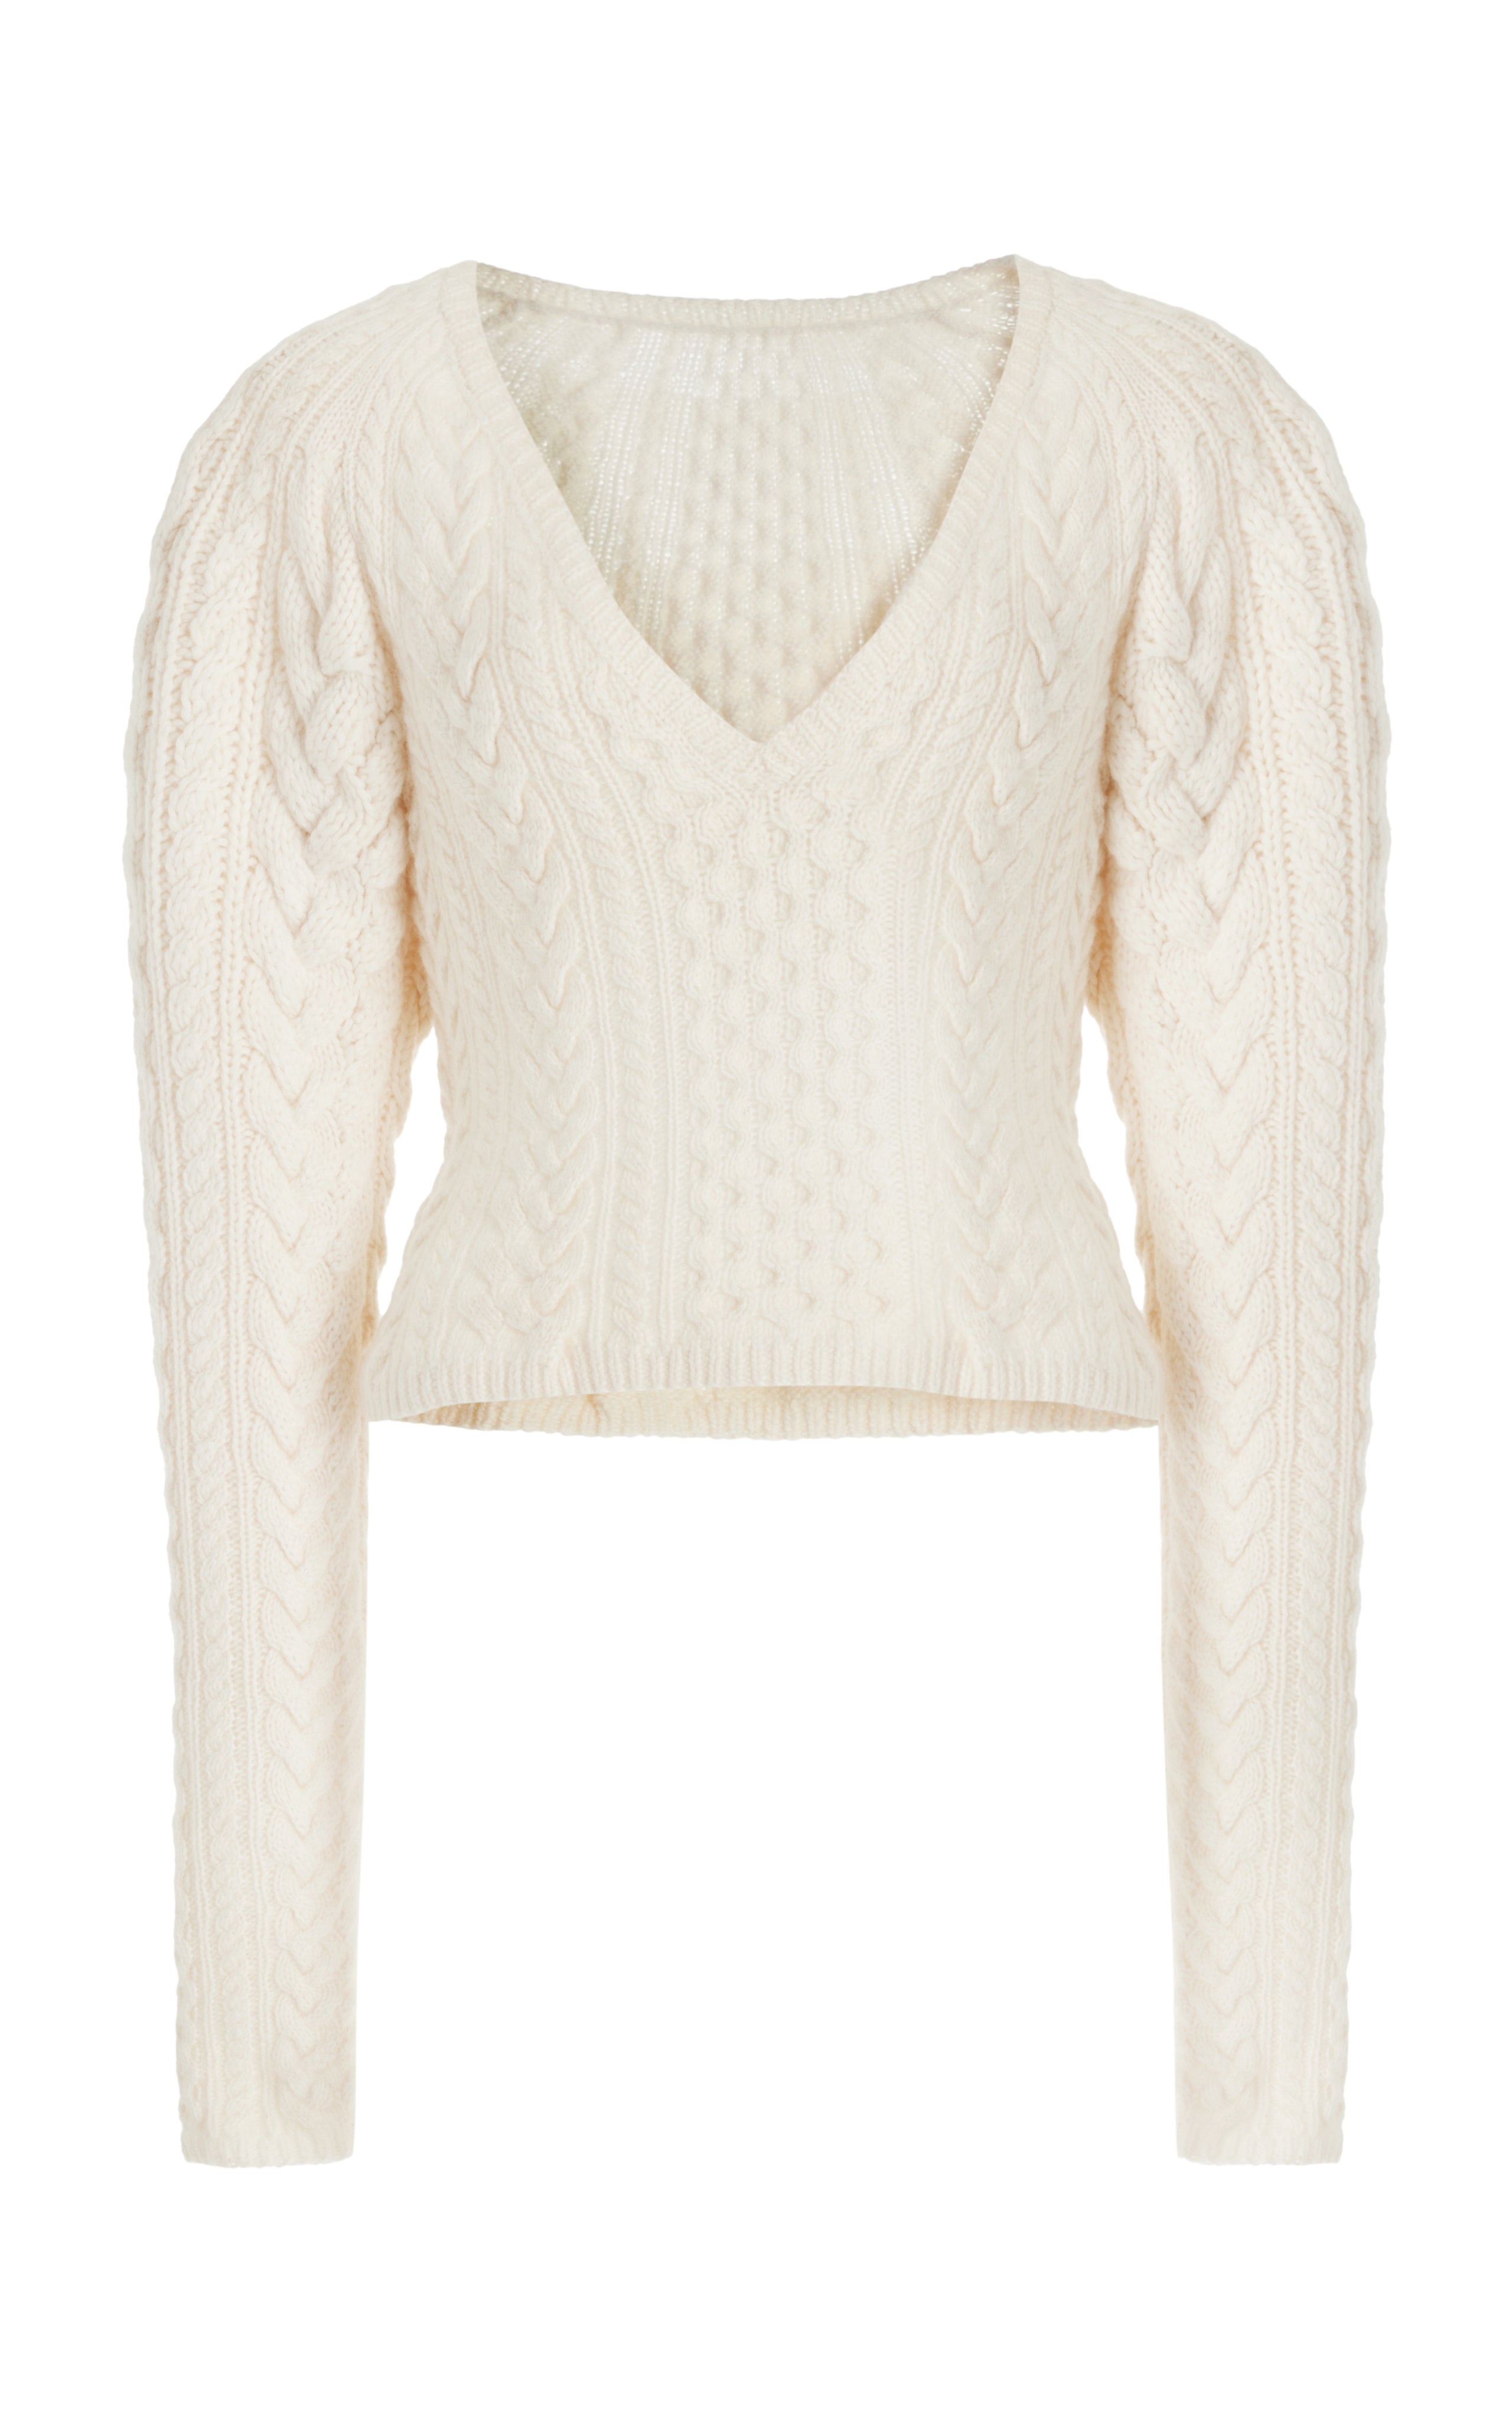 Arwel Sweater in Ivory Cashmere - 1